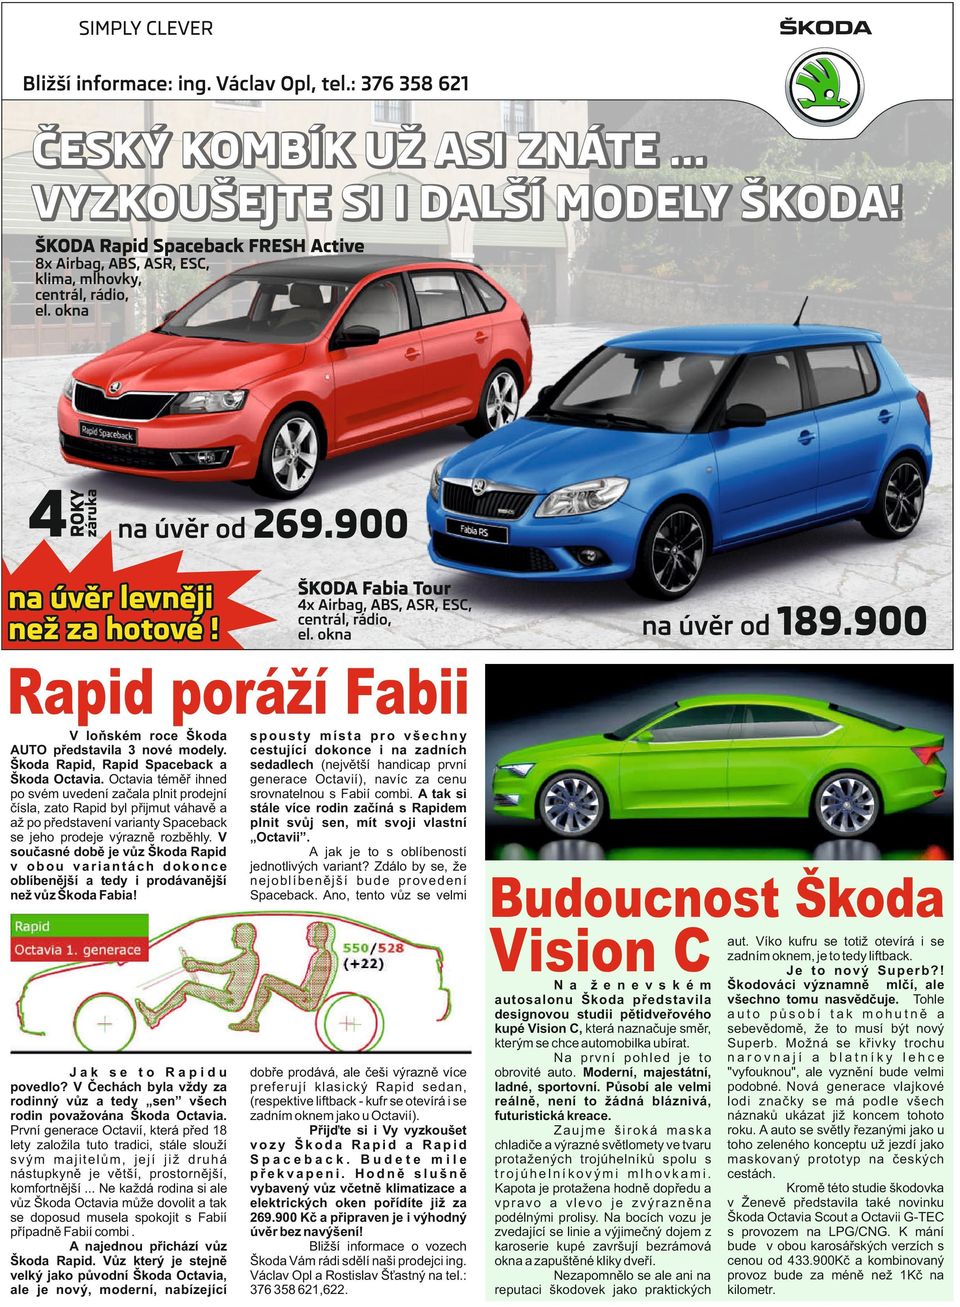 ŠKODA Fabia Tour 4x Airbag, ABS, ASR, ESC, centrál, rádio, el. okna na úvěr od 189.900 Rapid poráží Fabii V loňském roce Škoda AUTO představila 3 nové modely.